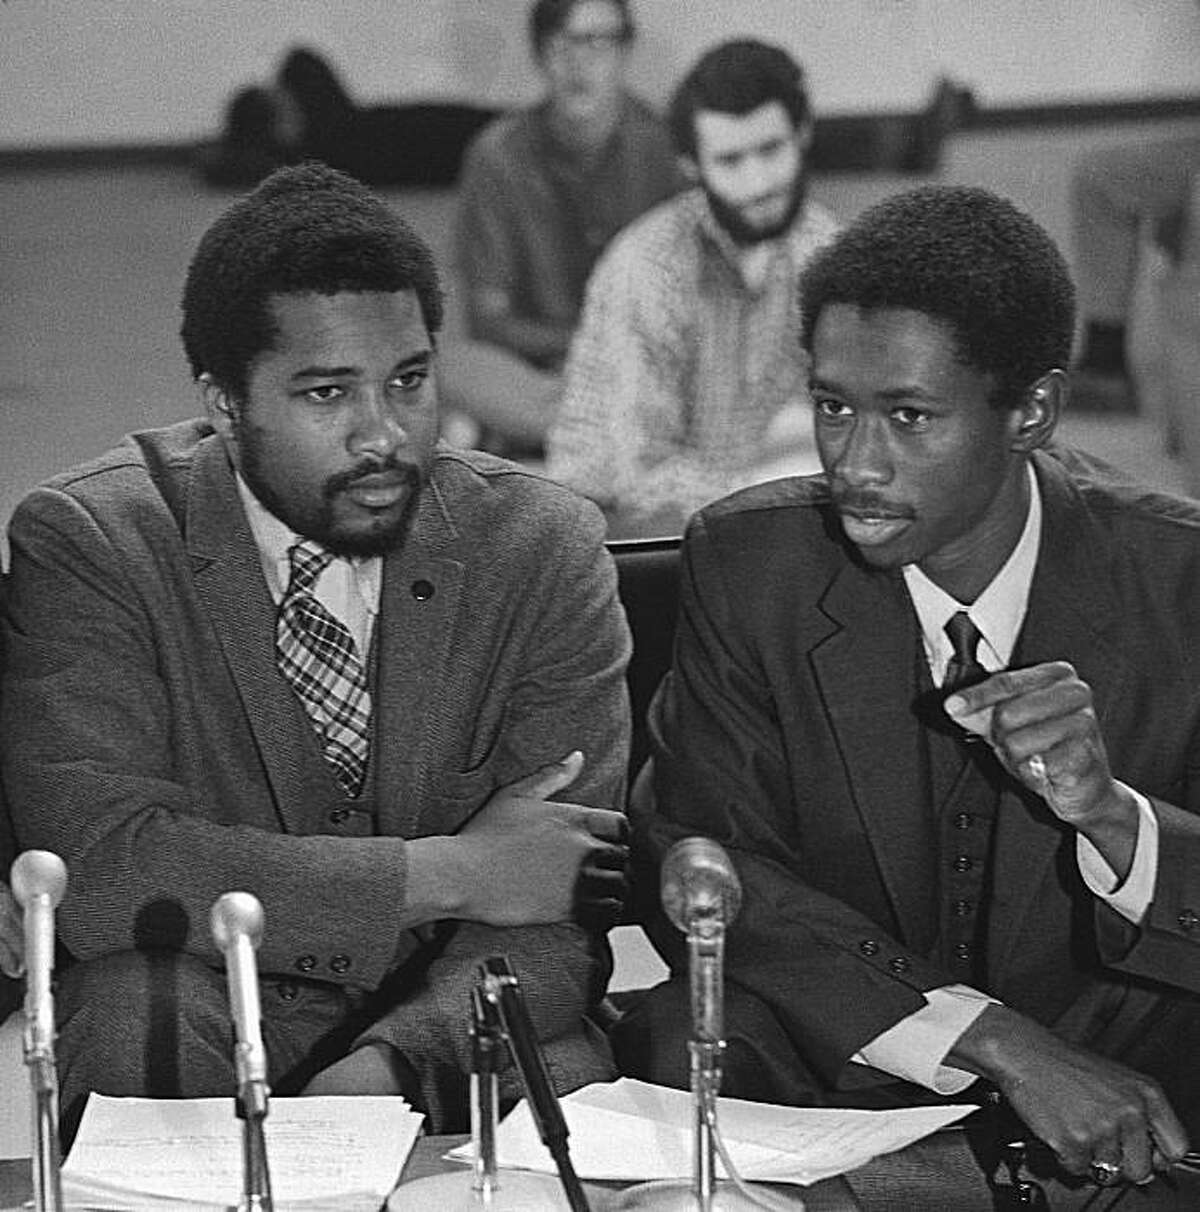 BSU_01.jpg 1967 - San Francisco State Black Student Union members (left to right) Tom Williams, Jerry Varnado and Jim Garrett.1967 - San Francisco State Black Student Union leaders (left to right) Jerry Varnado and Jim Garrett.